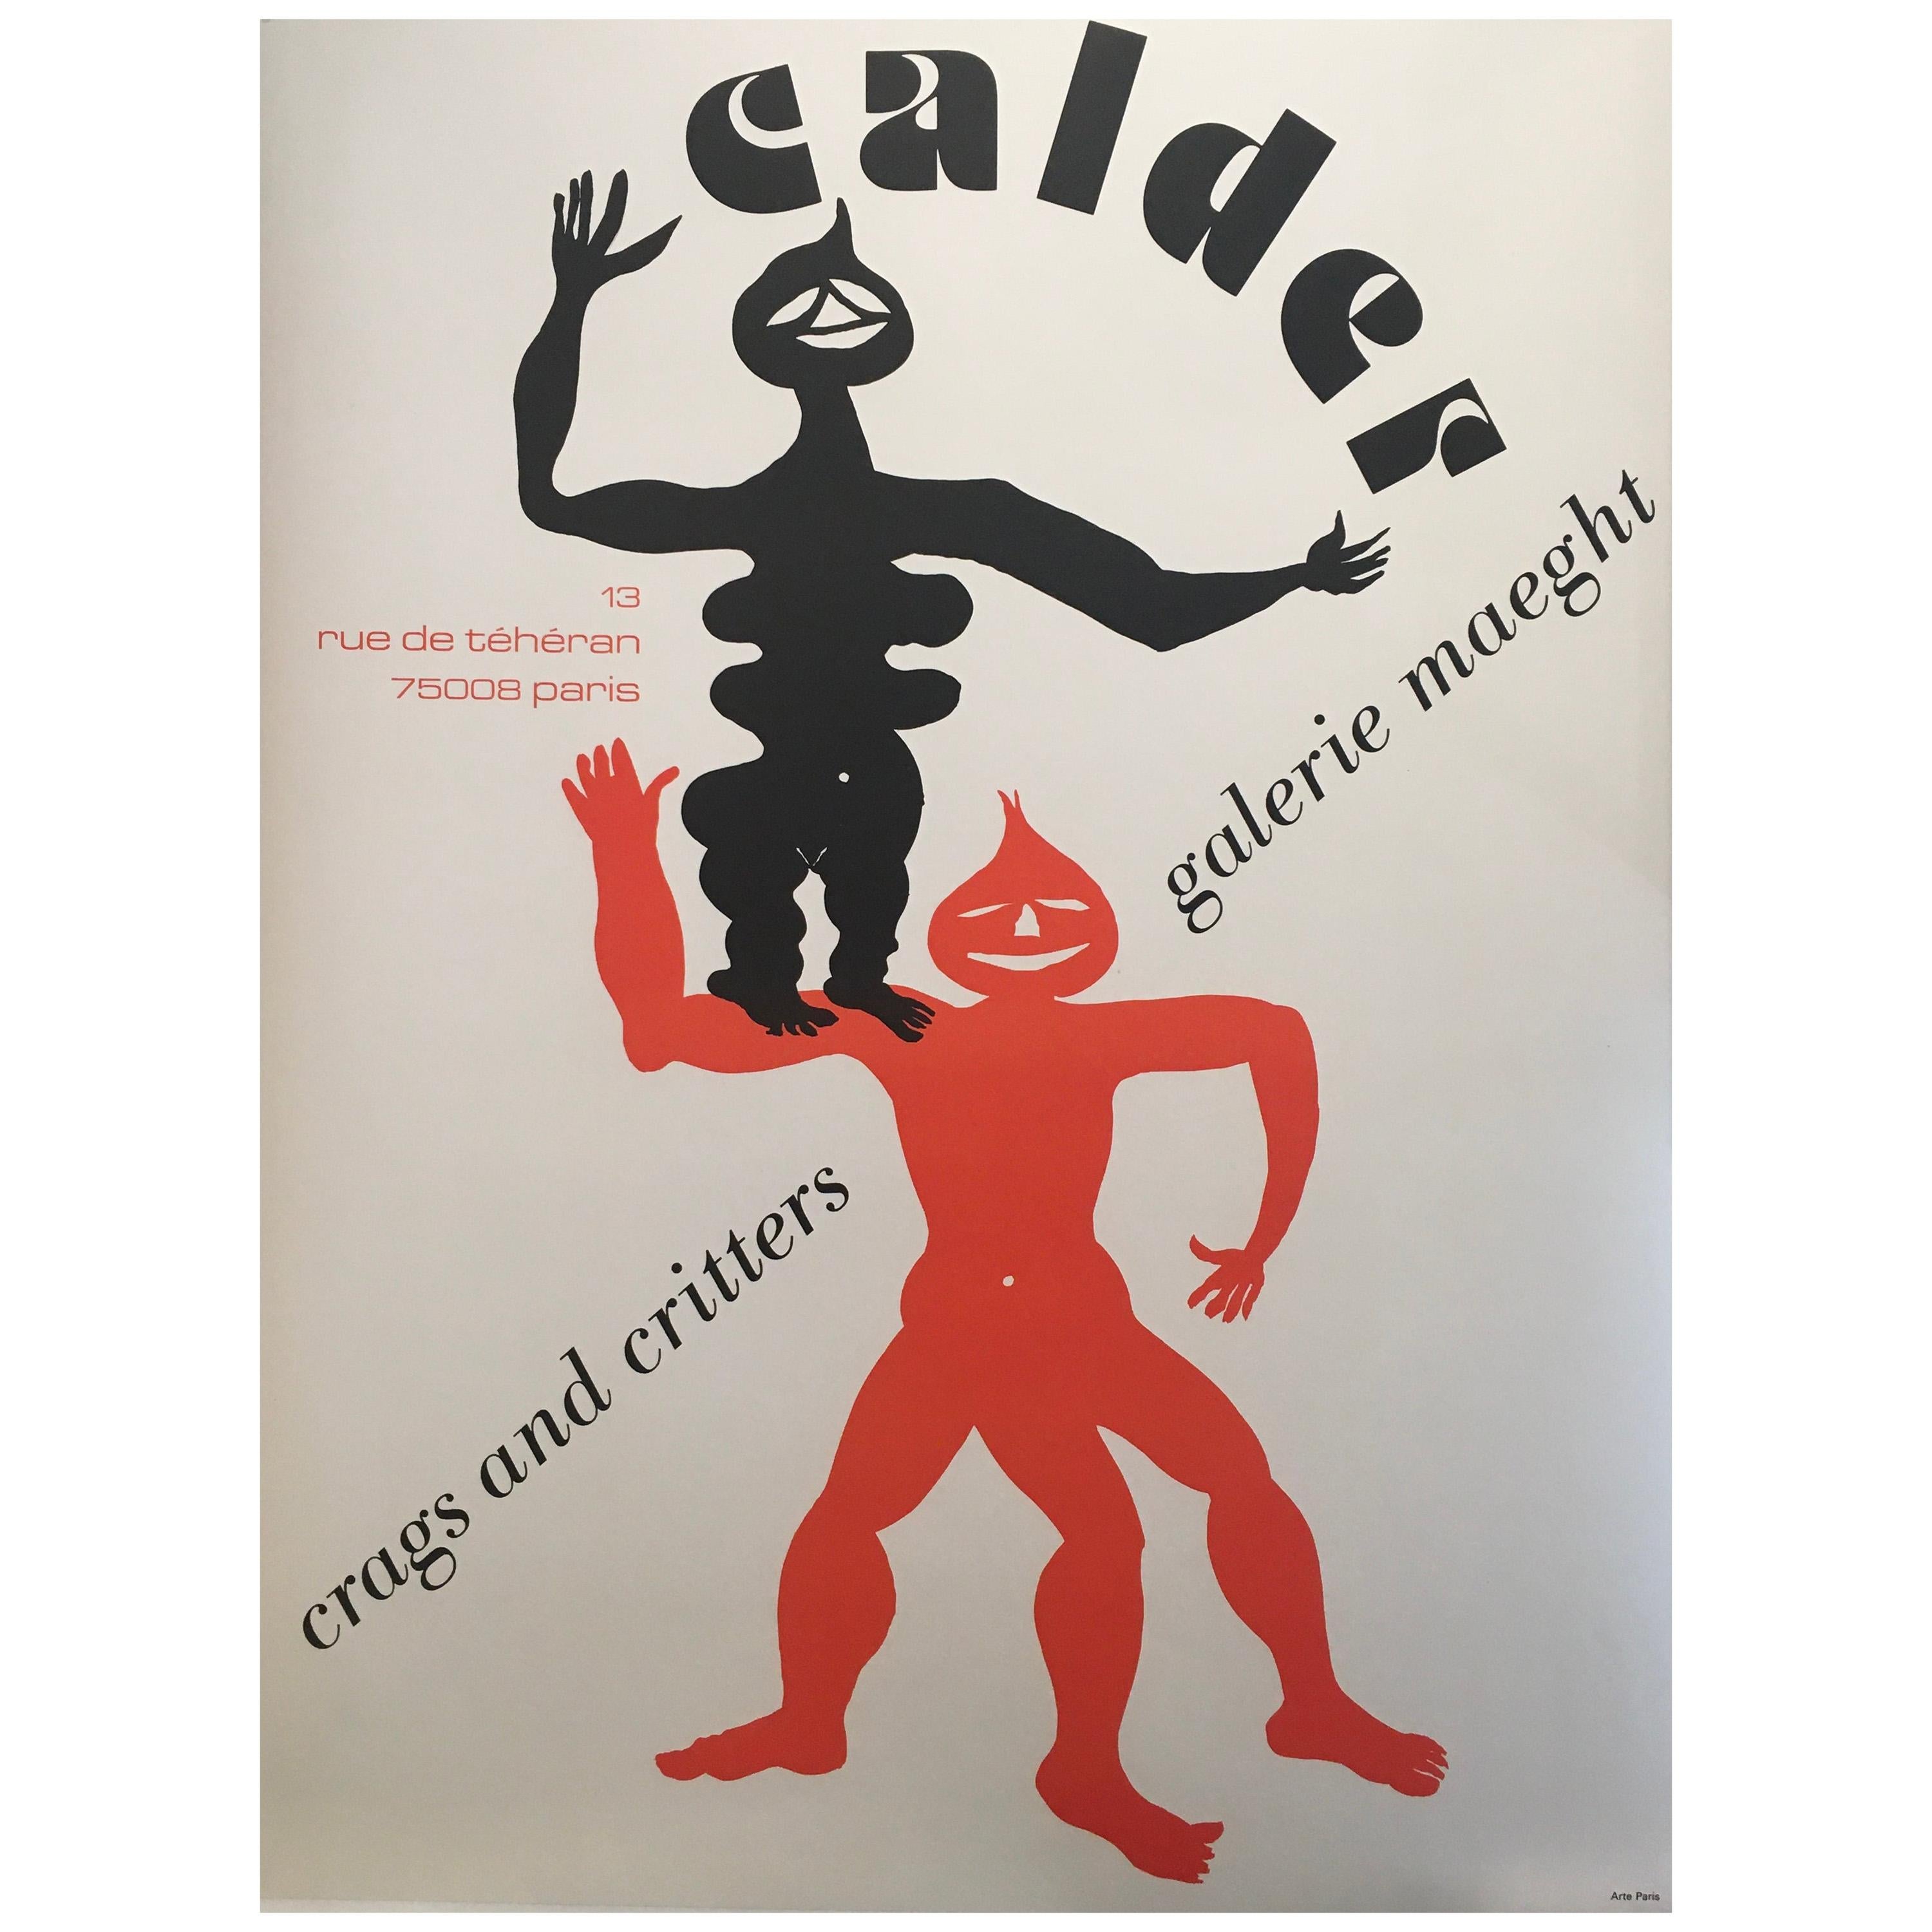 Original Vintage Poster, 'Calder Crags and Critters' 1975 Galerie Maeght